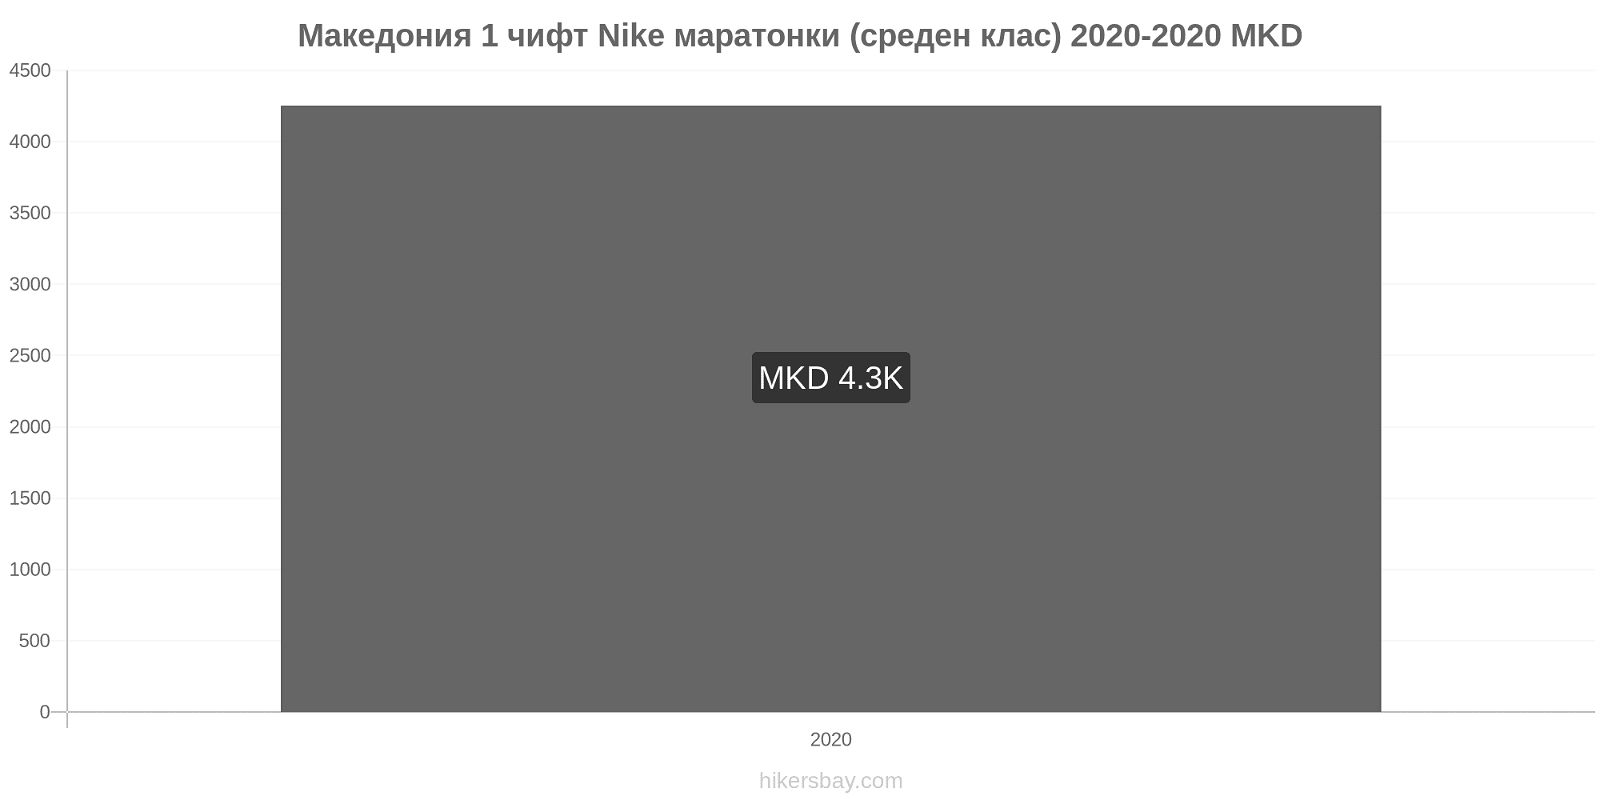 Македония ценови промени 1 чифт Nike маратонки (среден клас) hikersbay.com